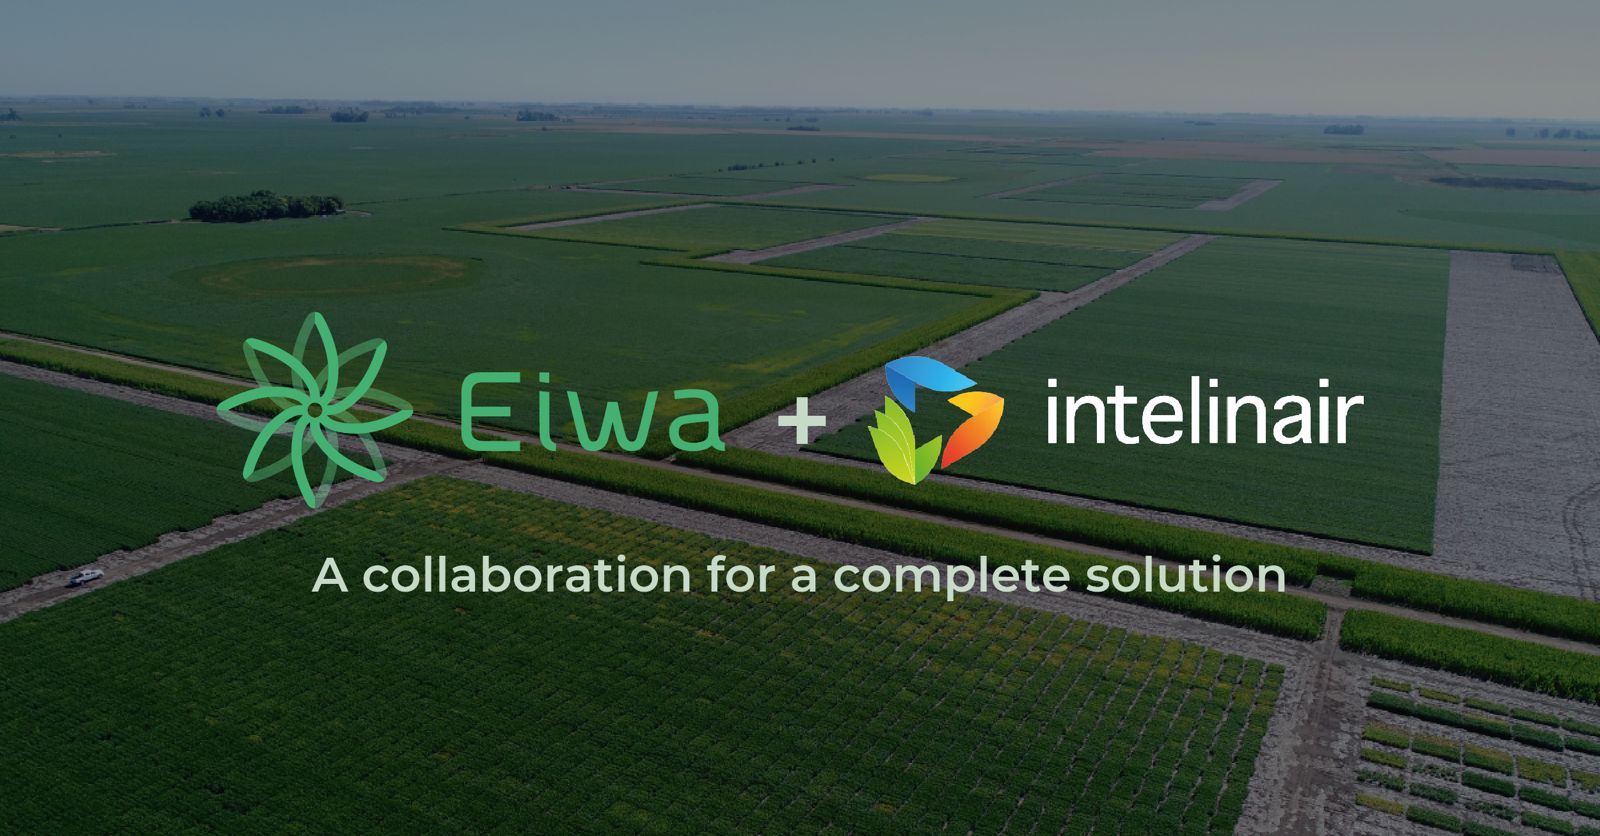 eiwa and intelinair collaboration